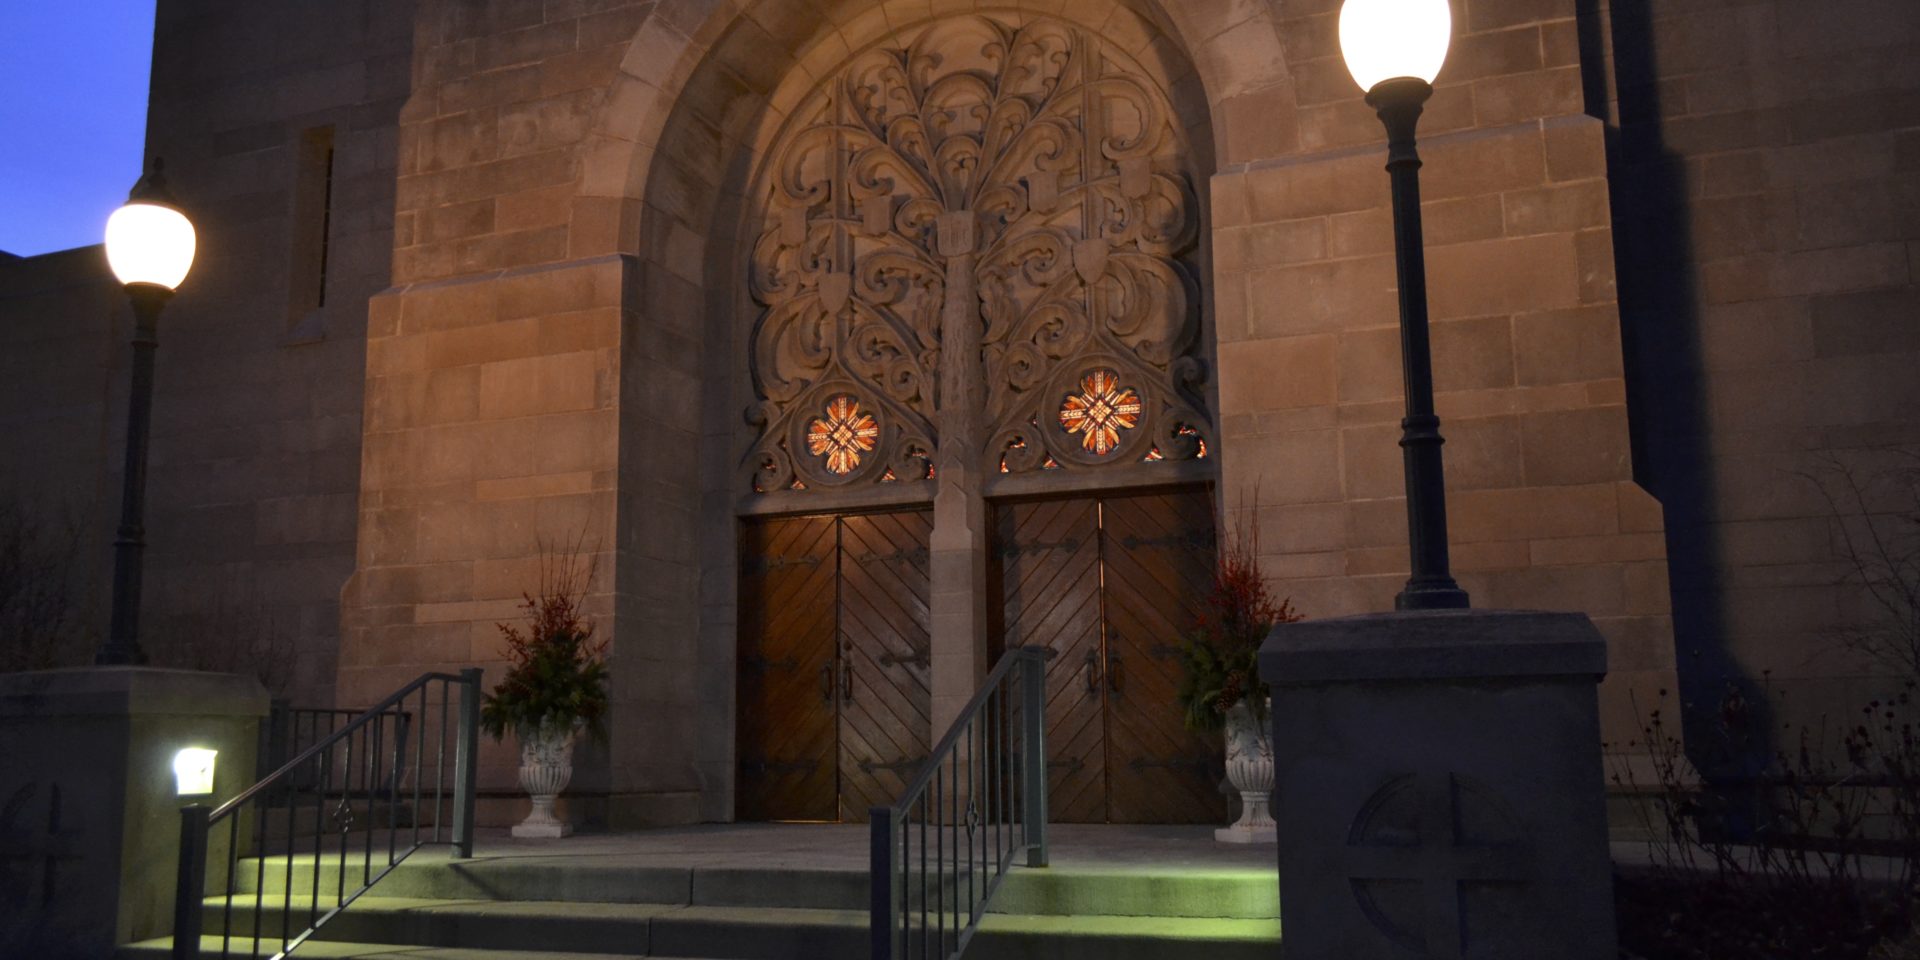 Doors of Grace Lutheran Church on Christmas Eve